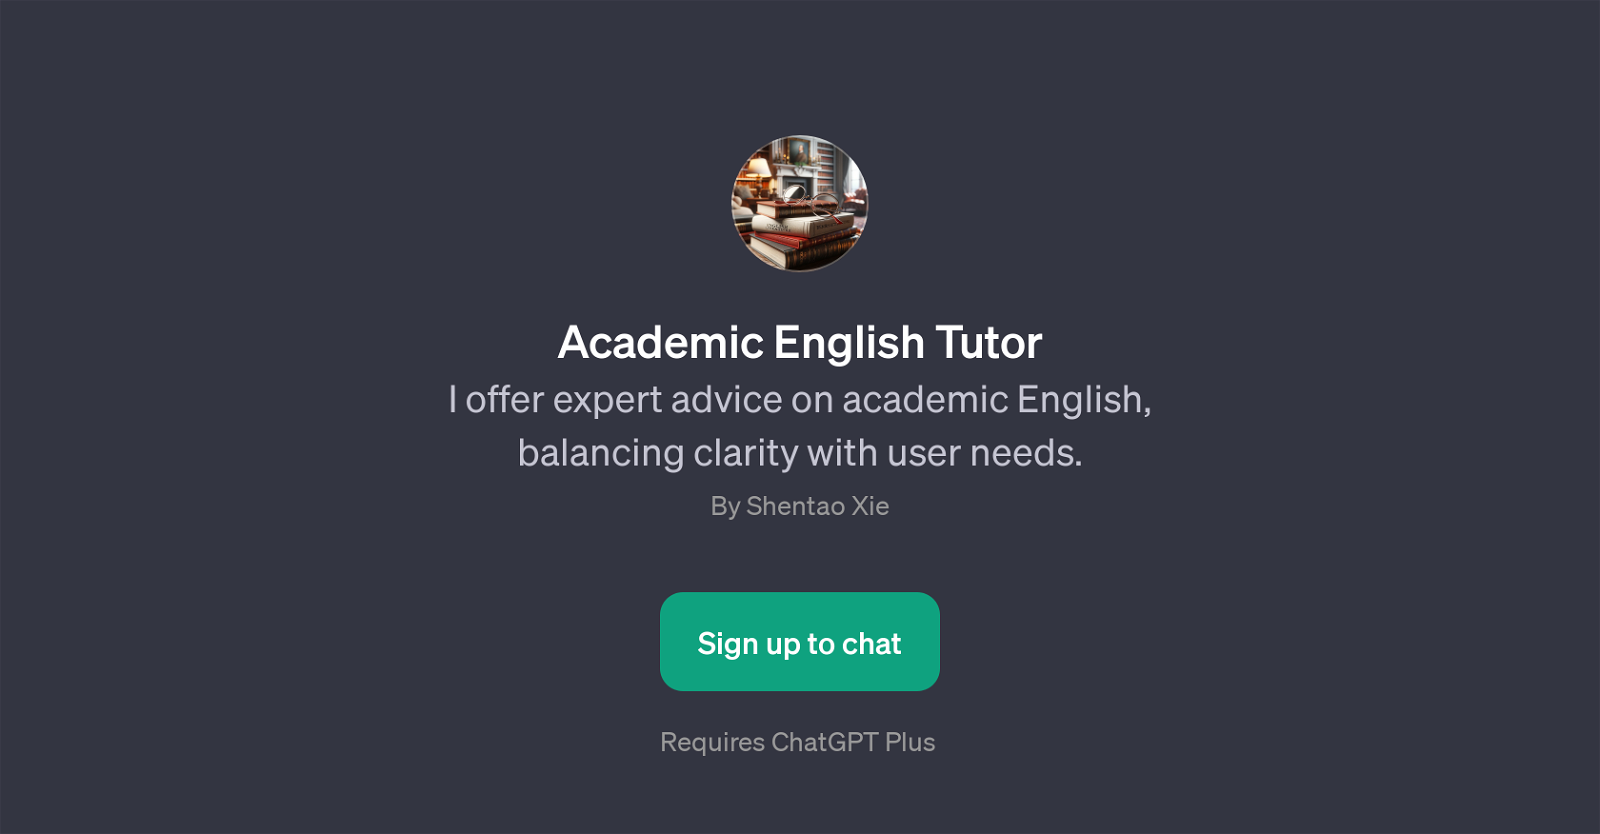 Academic English Tutor website